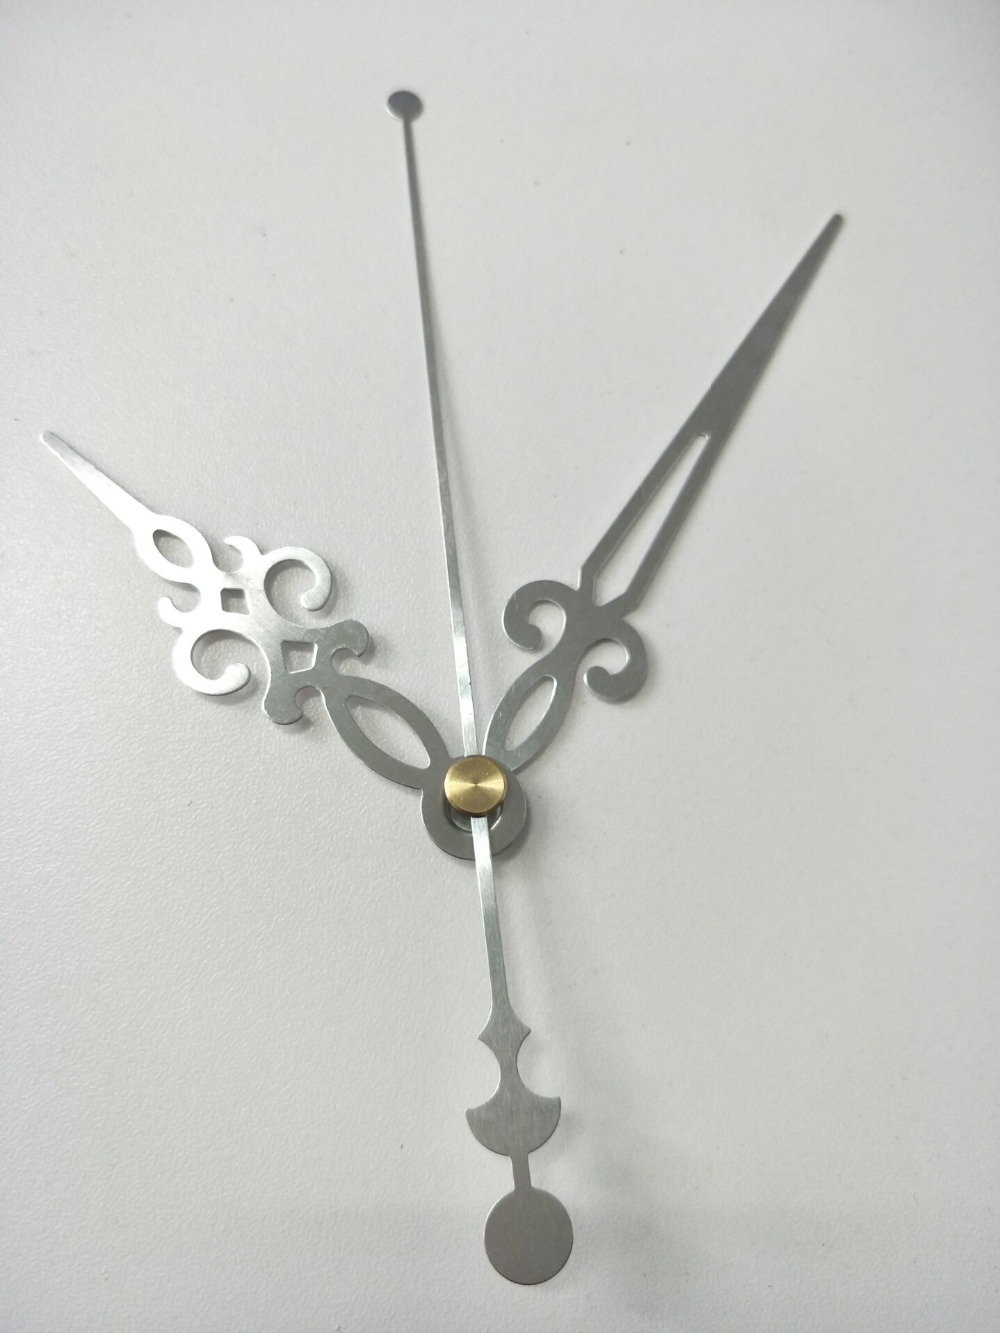 Wholesale 100sets/lot QUARTZ CLOCK Black Metal Hands DIY Repair Wall Clock Accessories Hollow Out Beautiful Needles